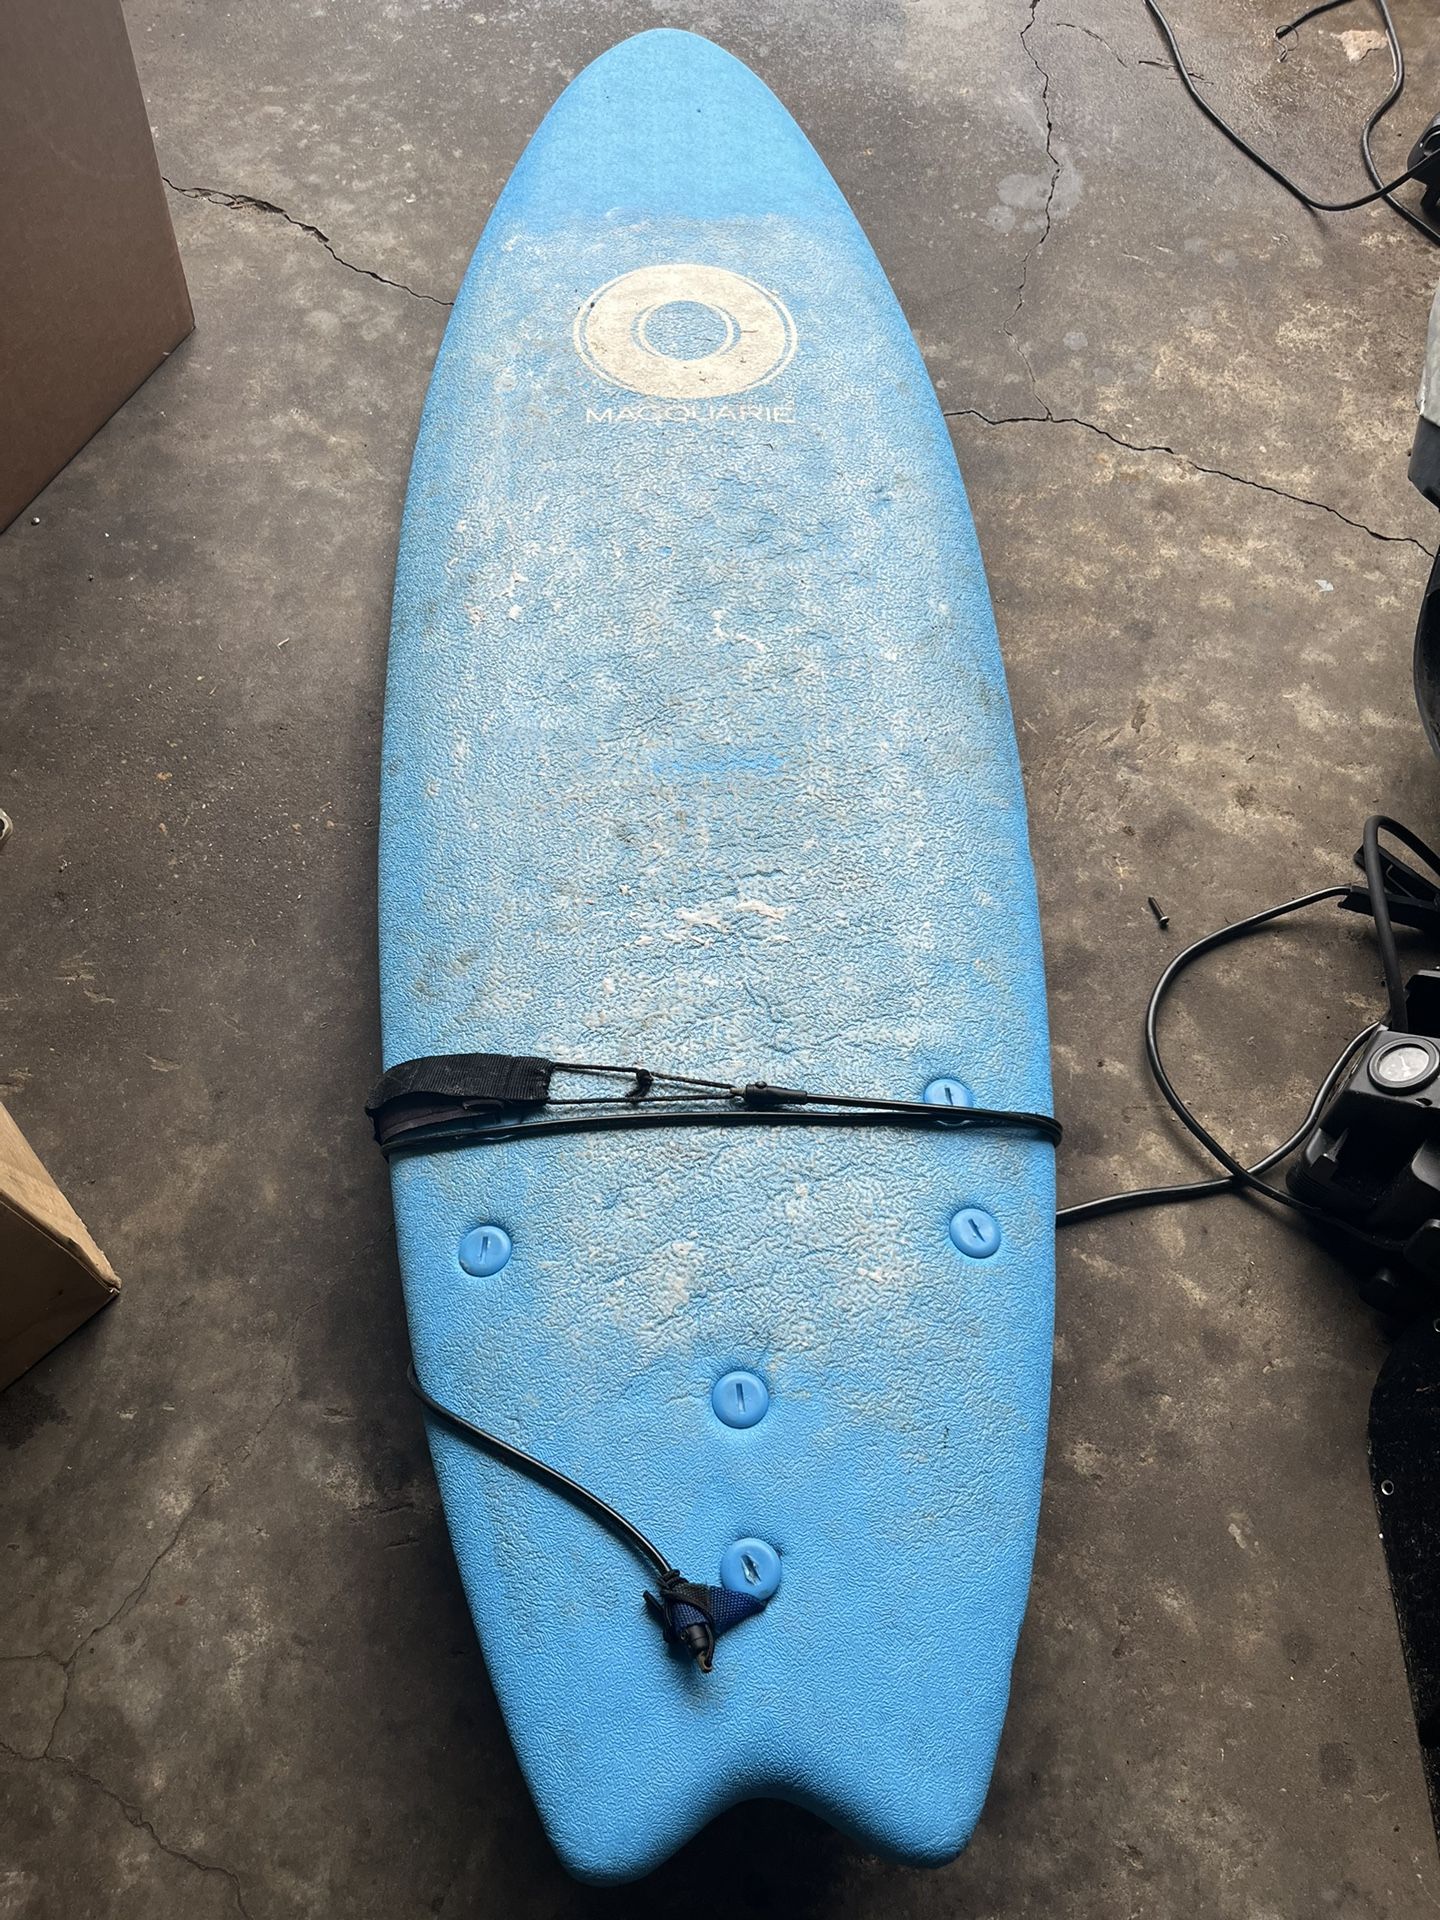 Soft top Surfboard 6’0